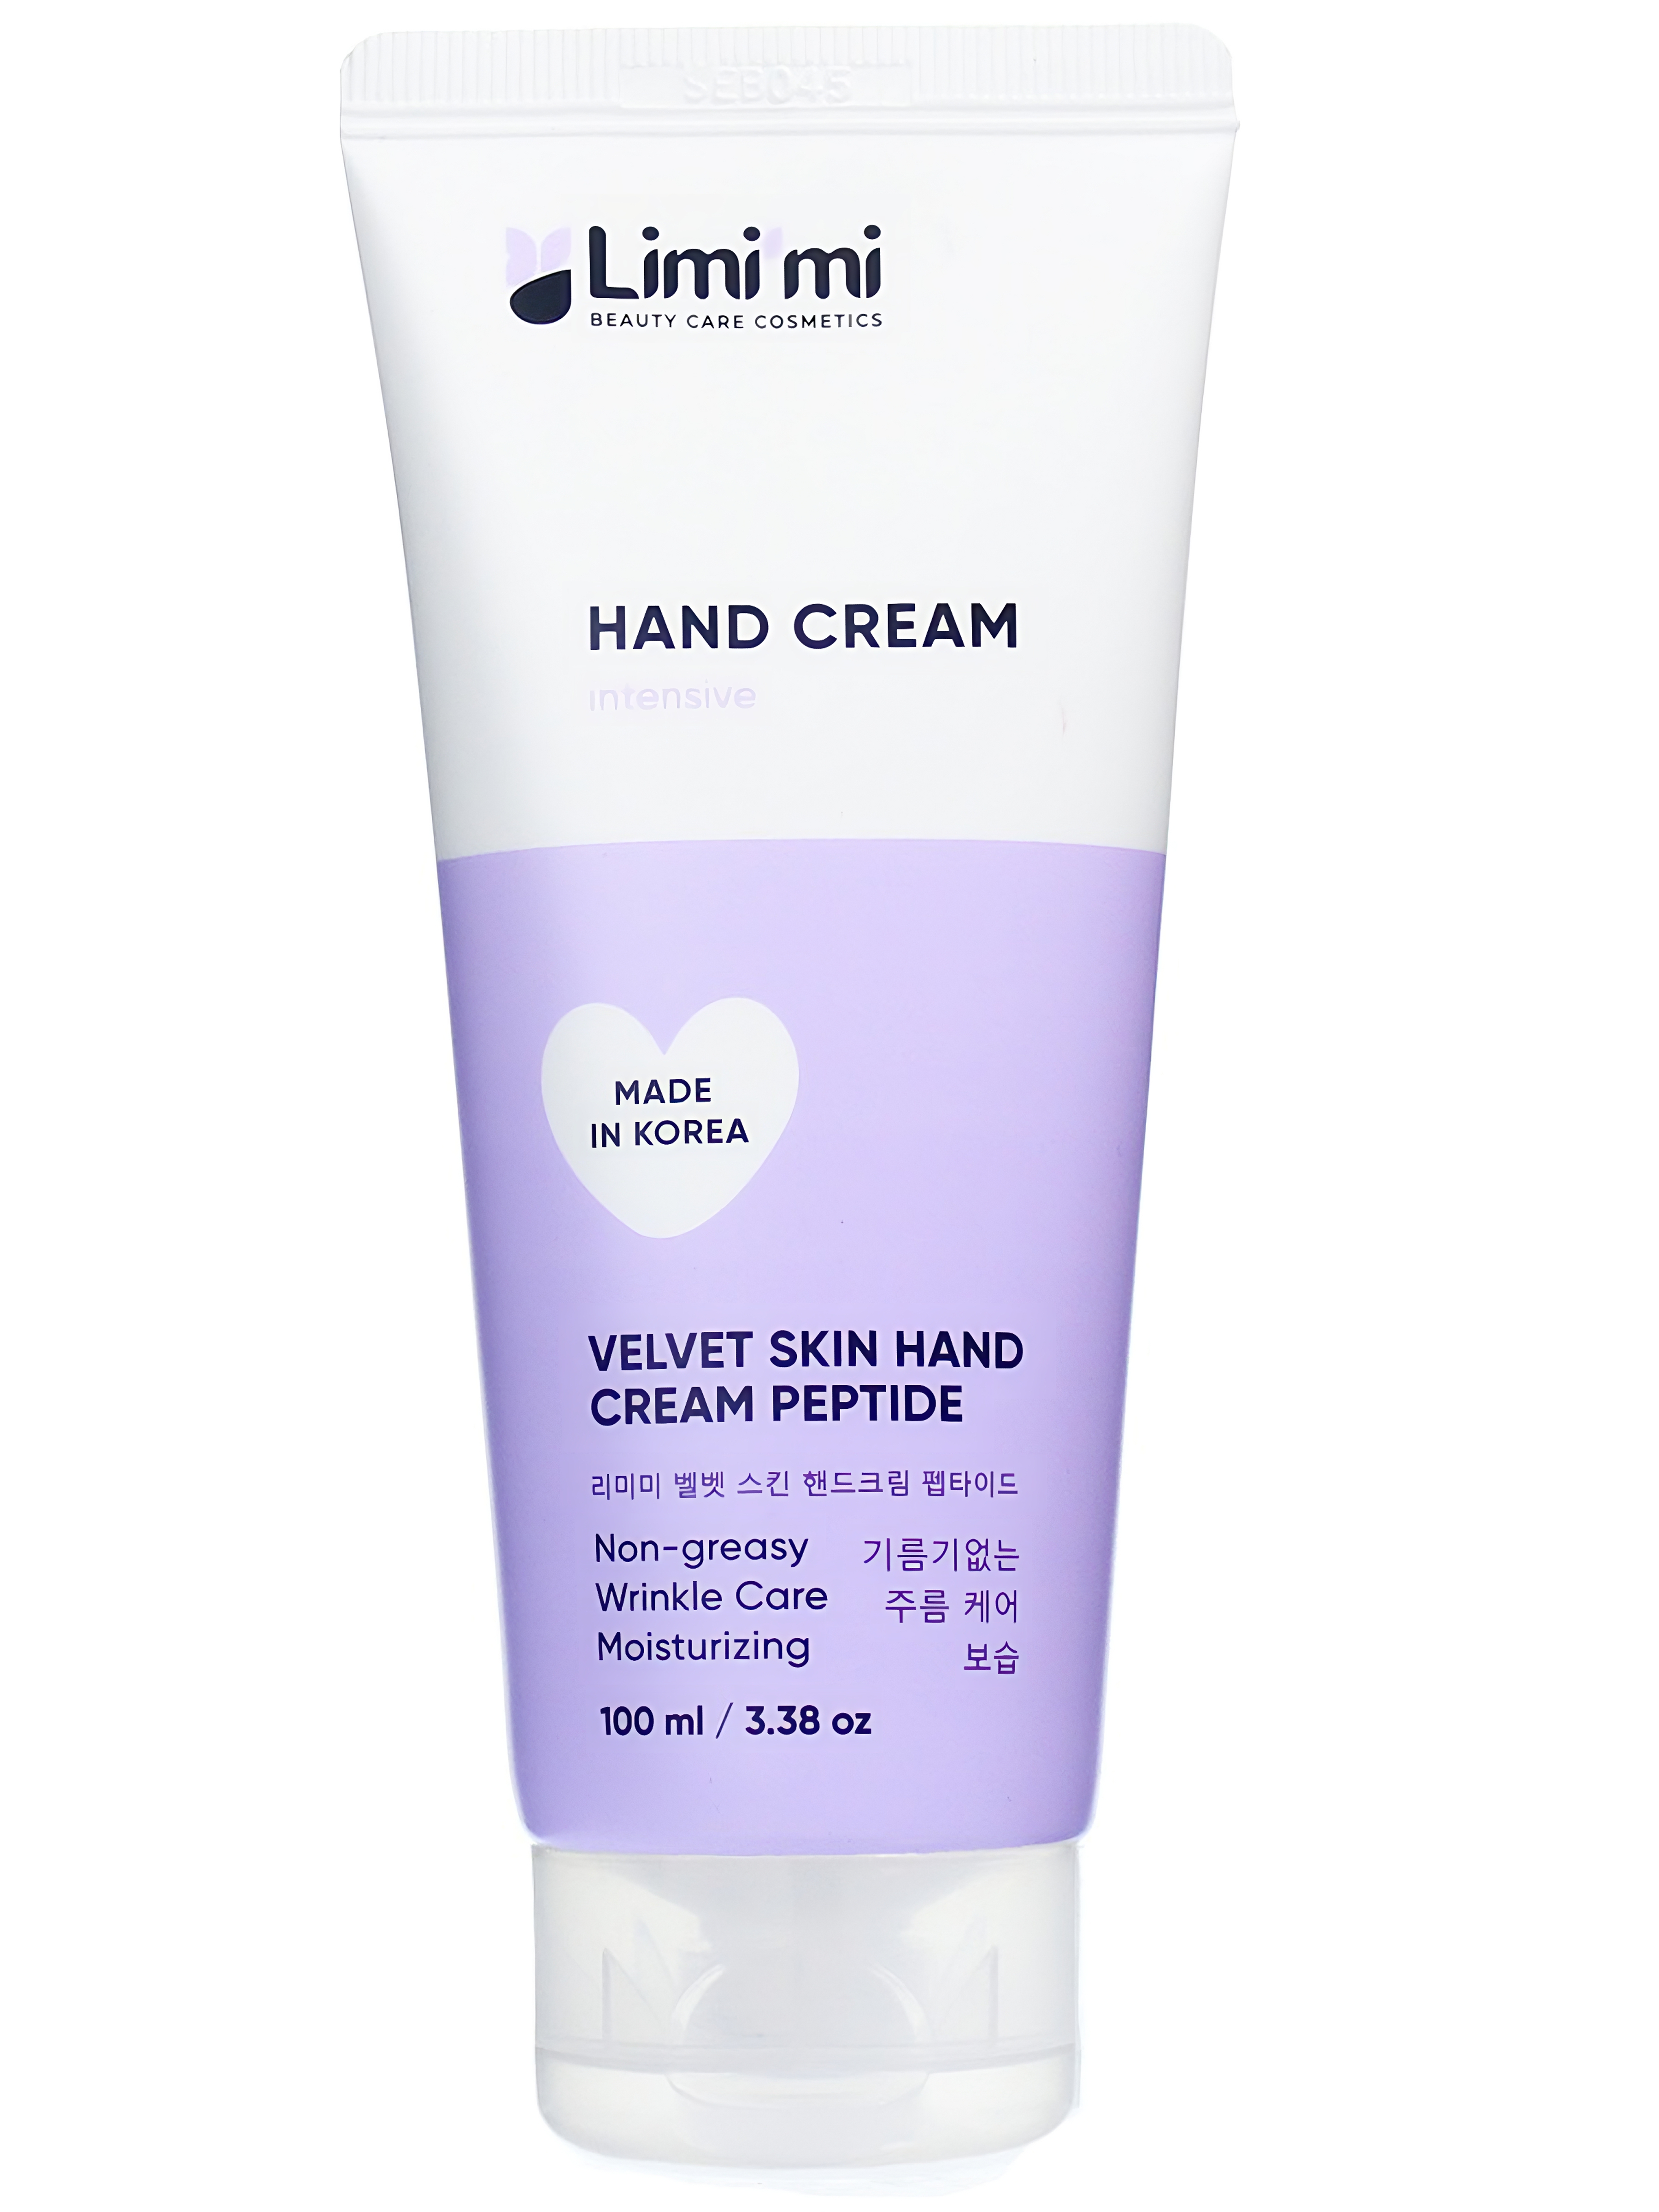 Крем для рук Limimi с пептидами Velvet Skin Hand Cream Peptide 100 мл 30 нажатий 2 вдоха как спасают жизни